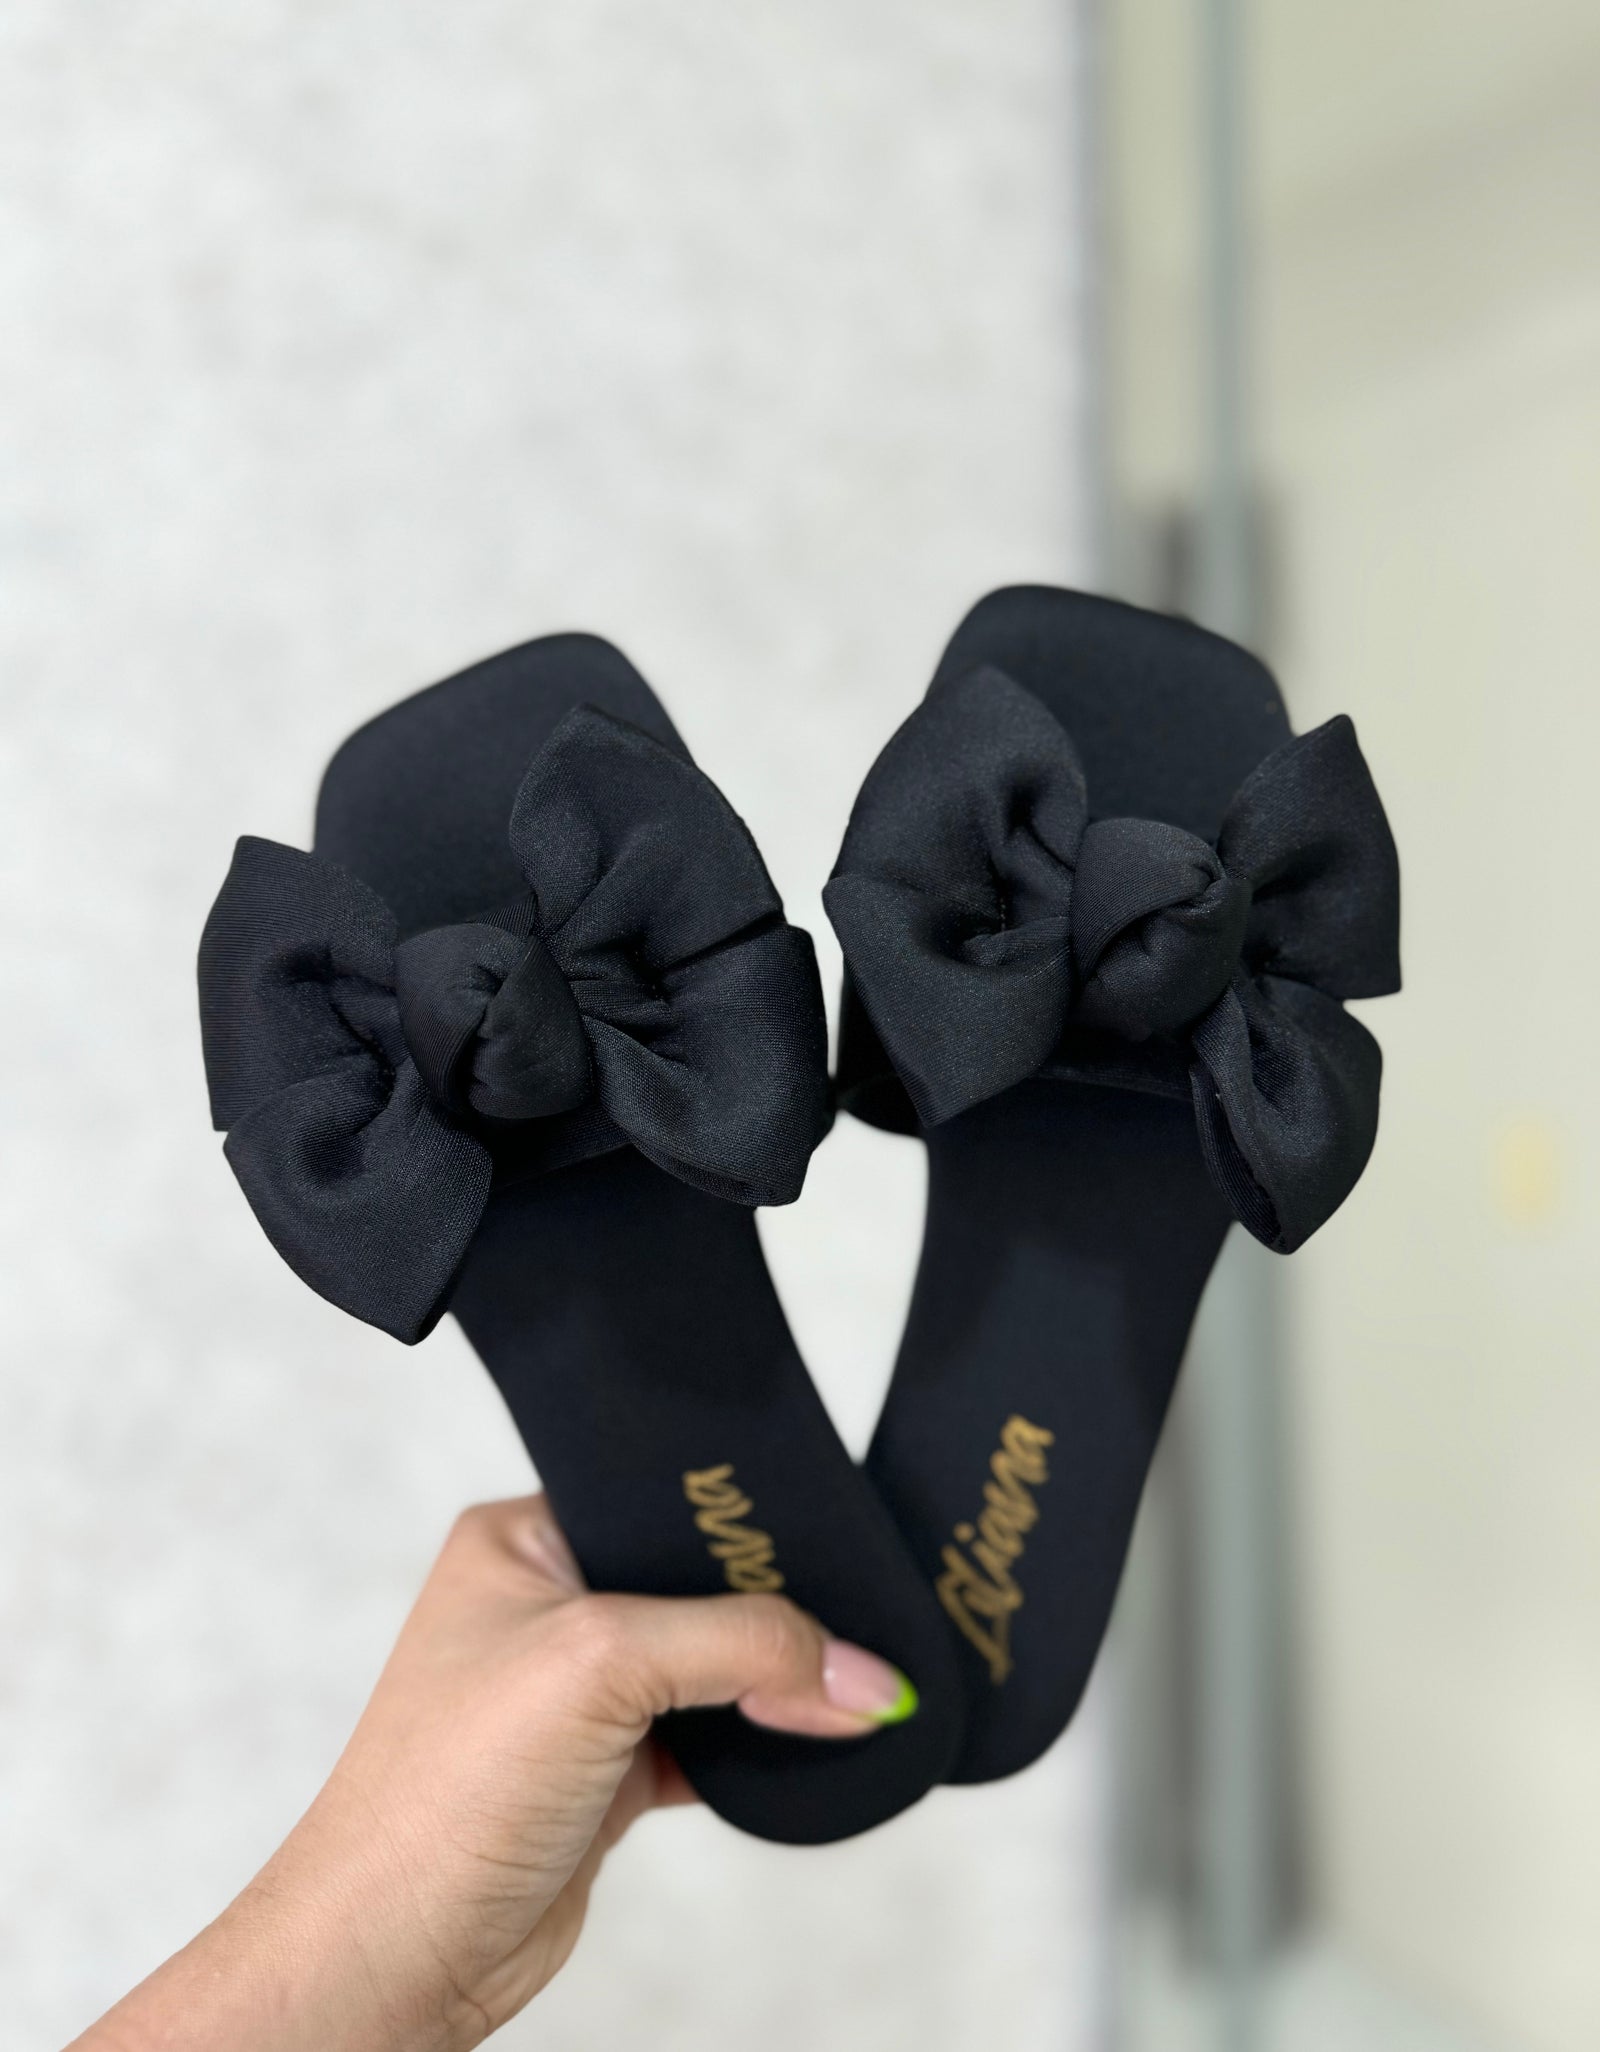 Sandalias negras con moños